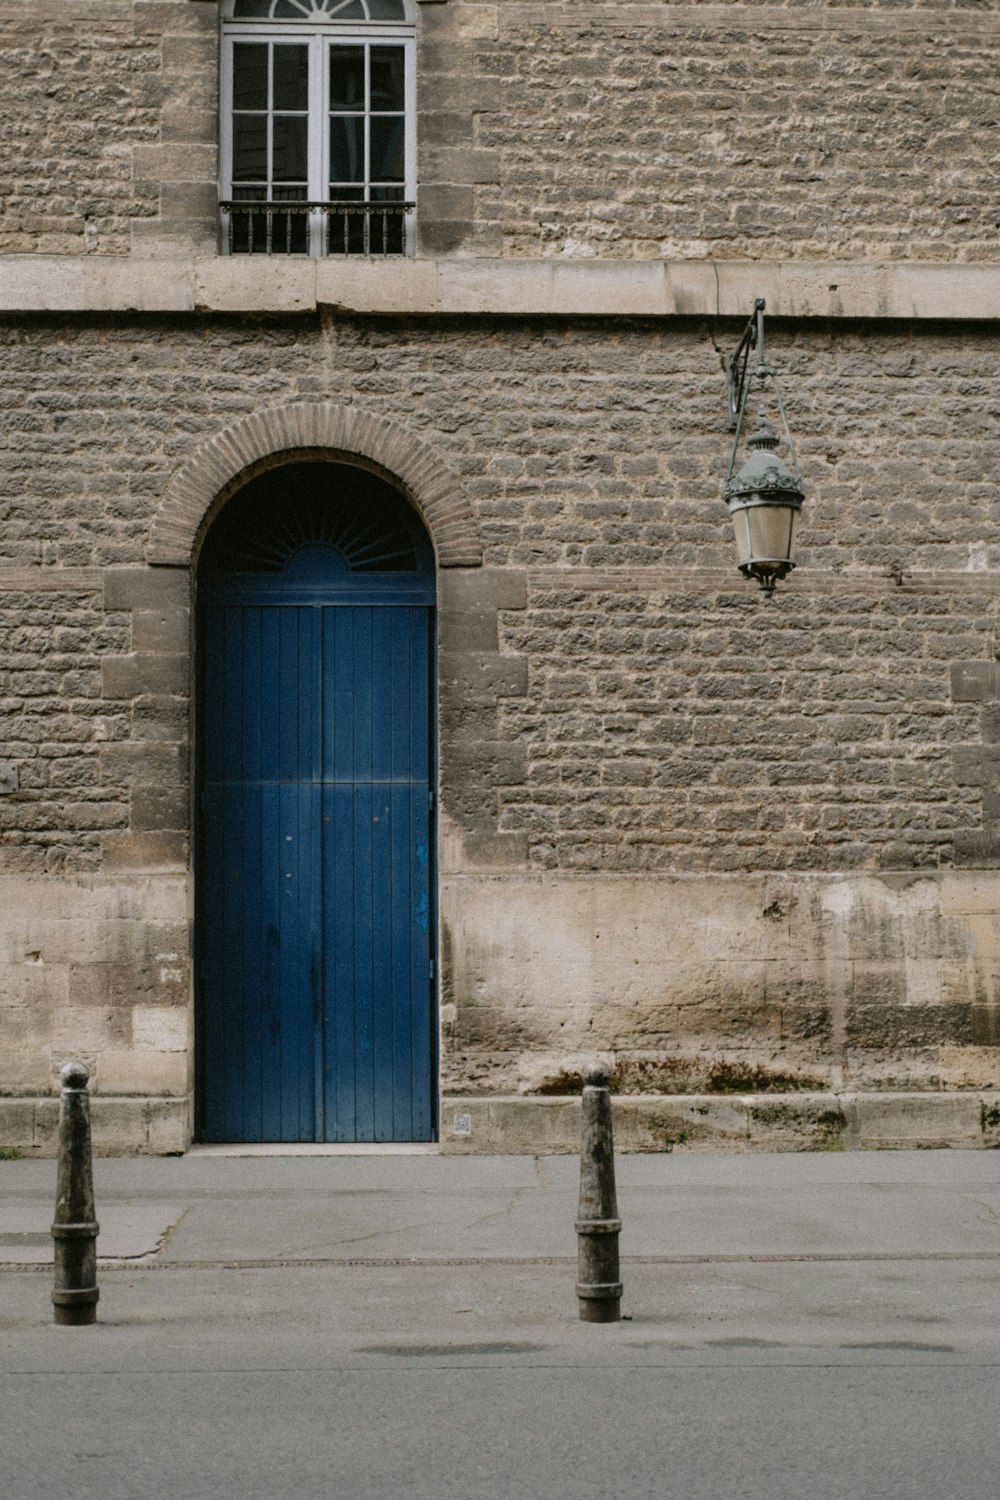 a blue door is in front of a brick building